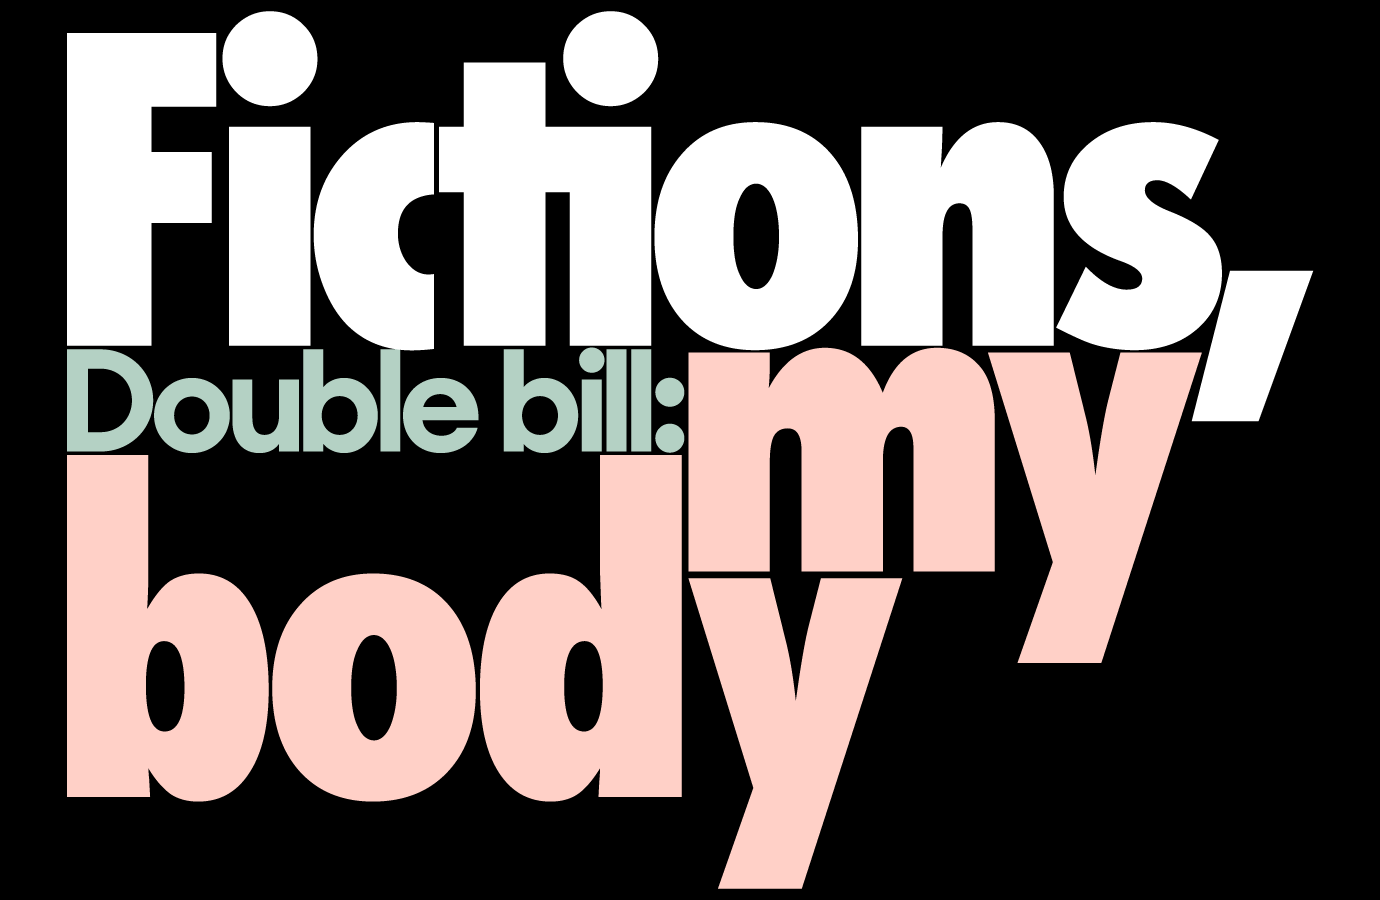 Double-bill: Fictions, my body